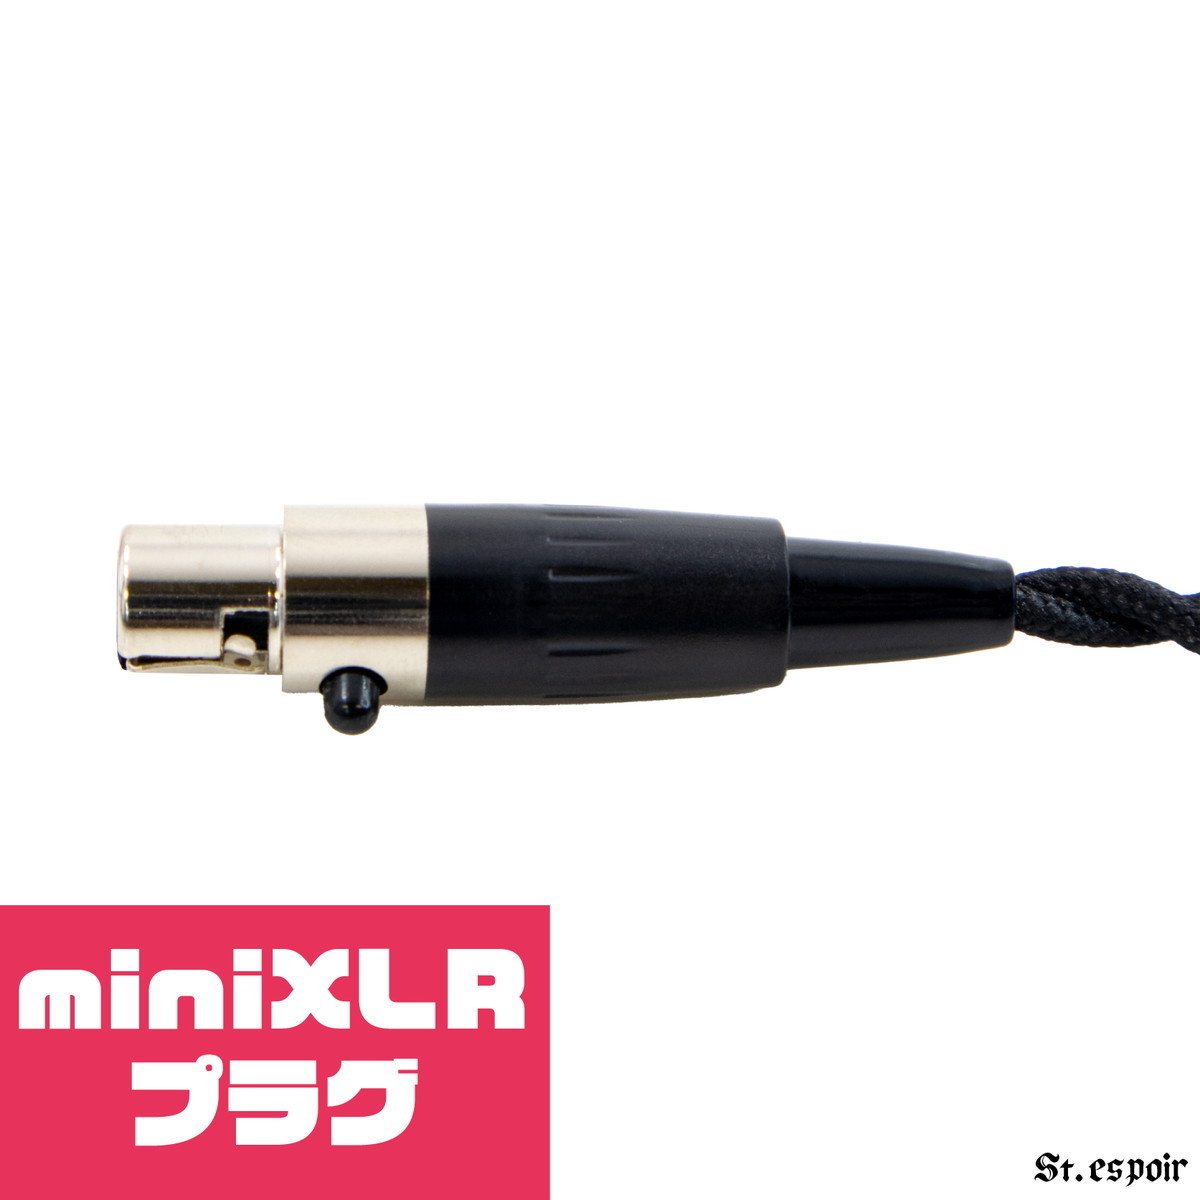  high grade headphone cable 1.2m mini XLR 1.2m nylon coating li cable * for exchange 3 ultimate Mini XLR plug. equipment .